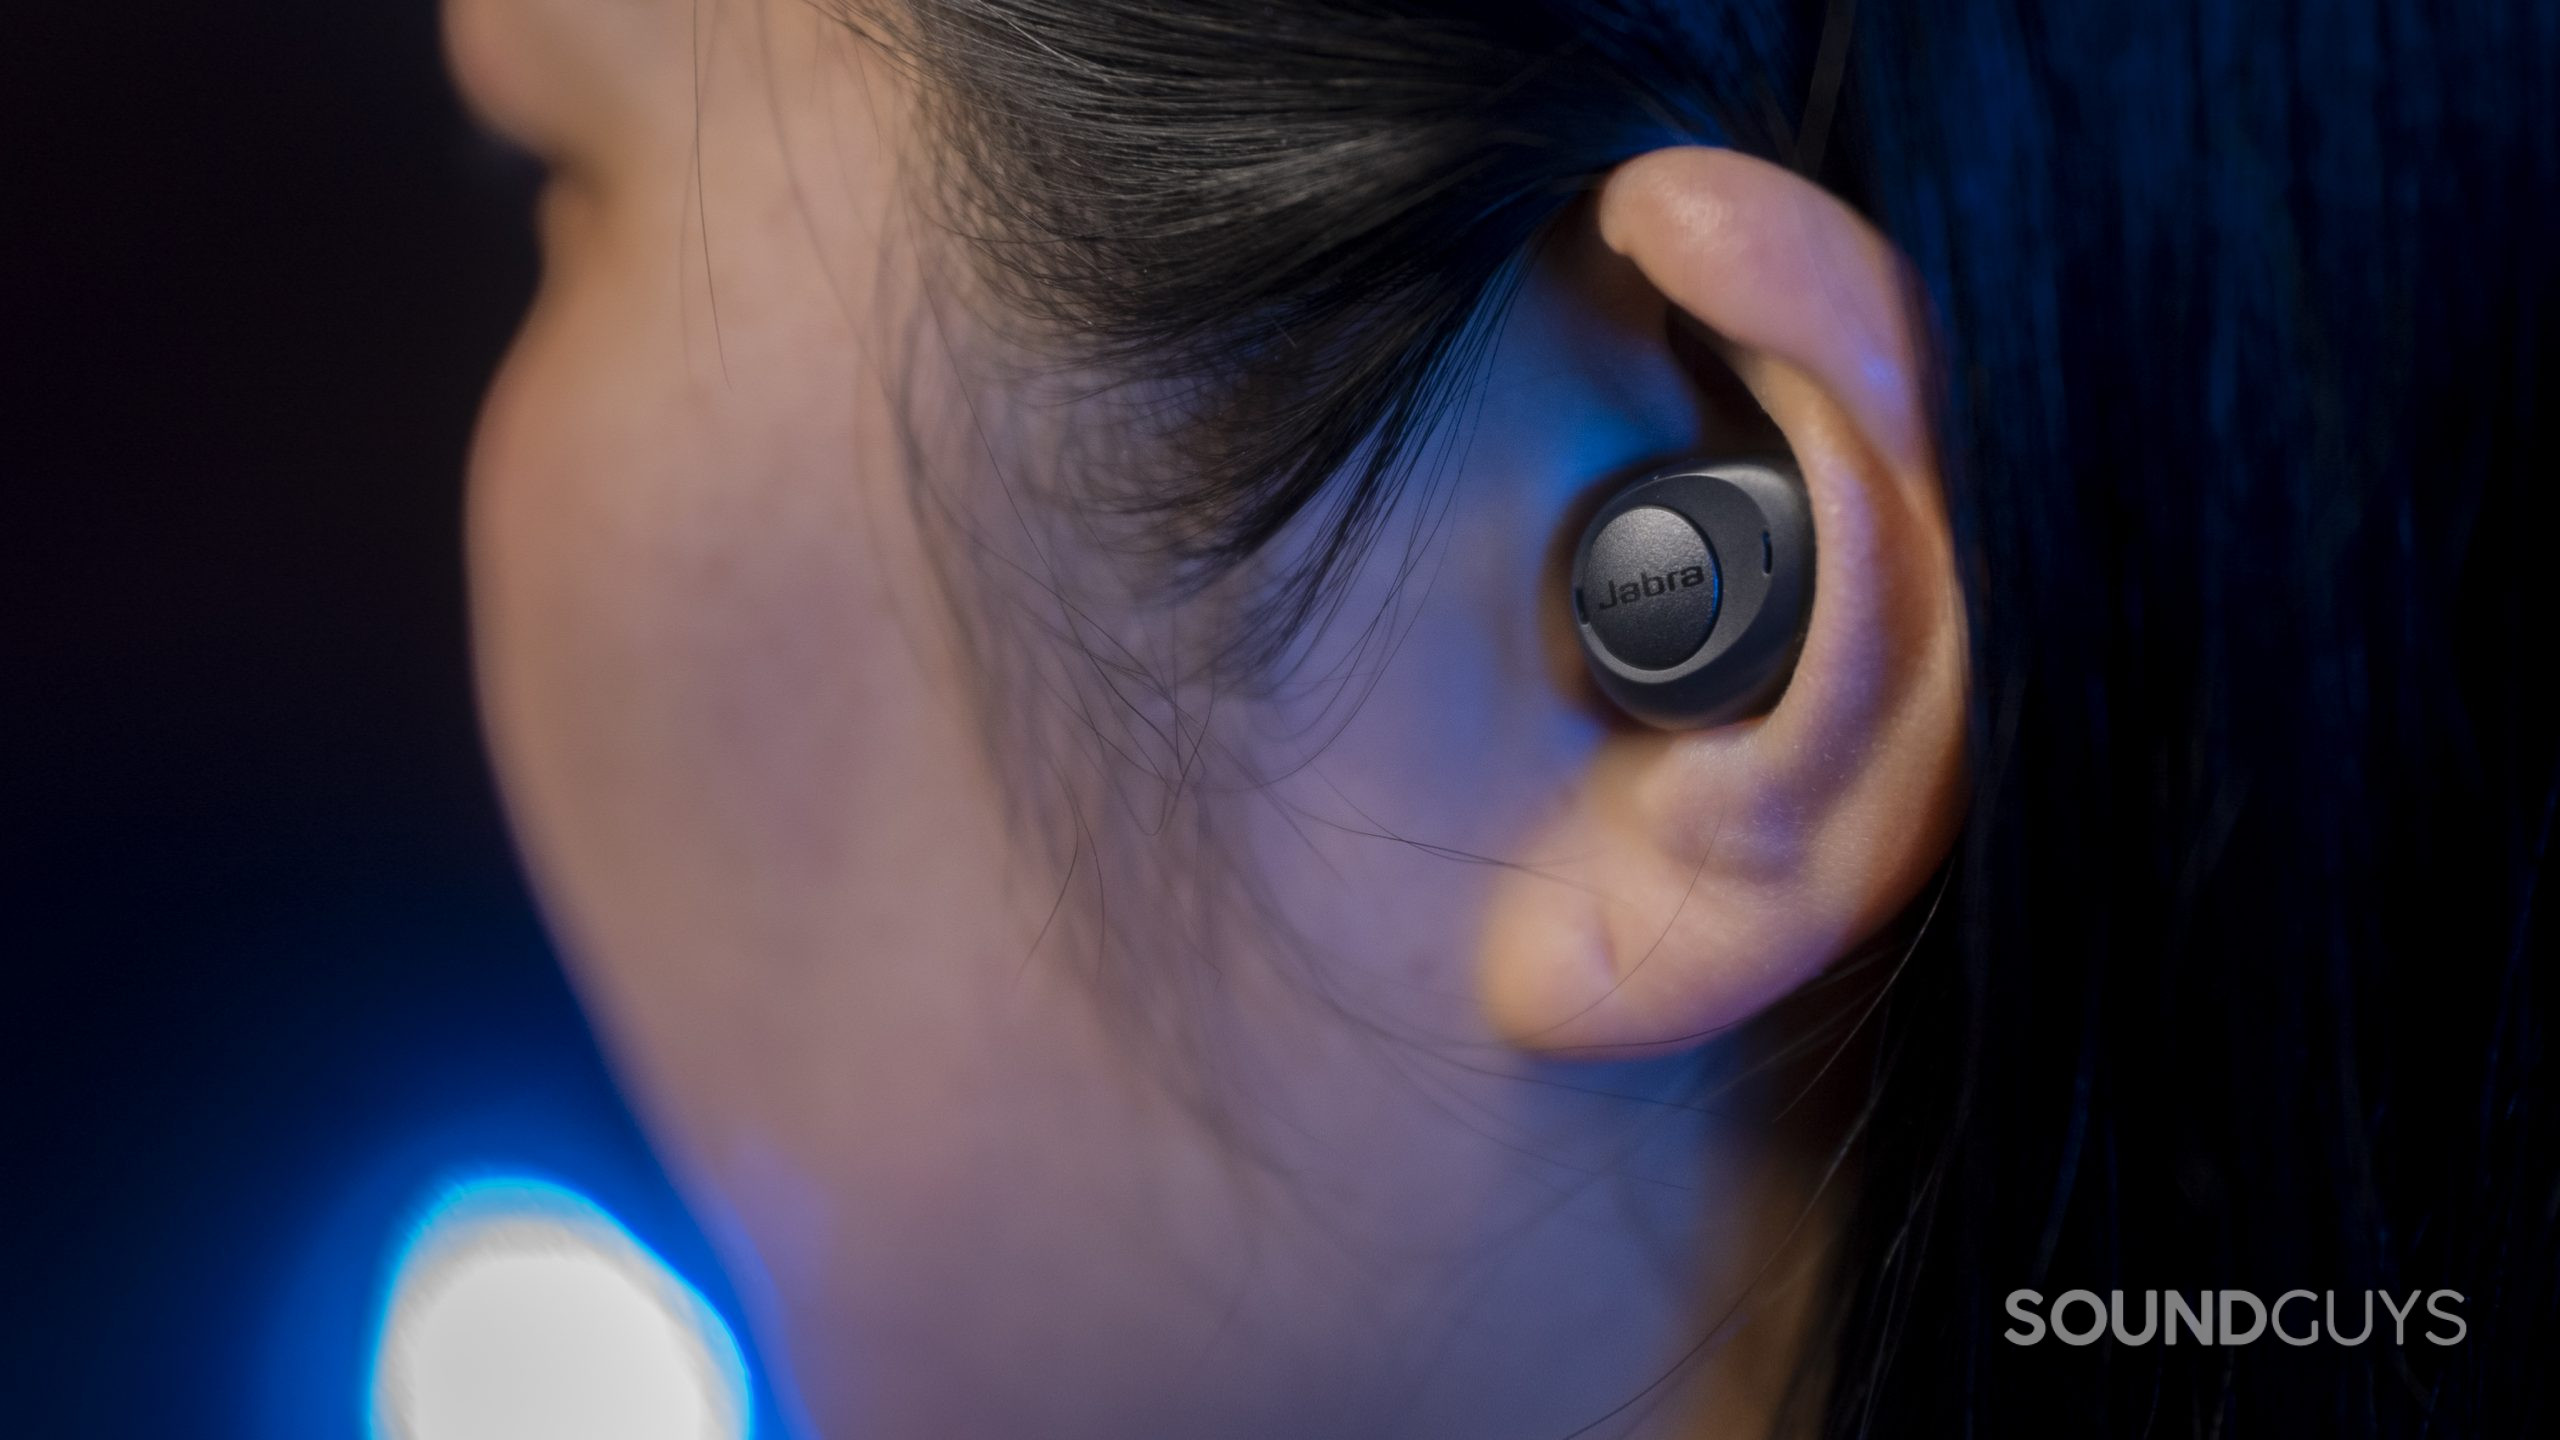 The Jabra Enhance Plus hearing aid hearable in a woman's left ear.